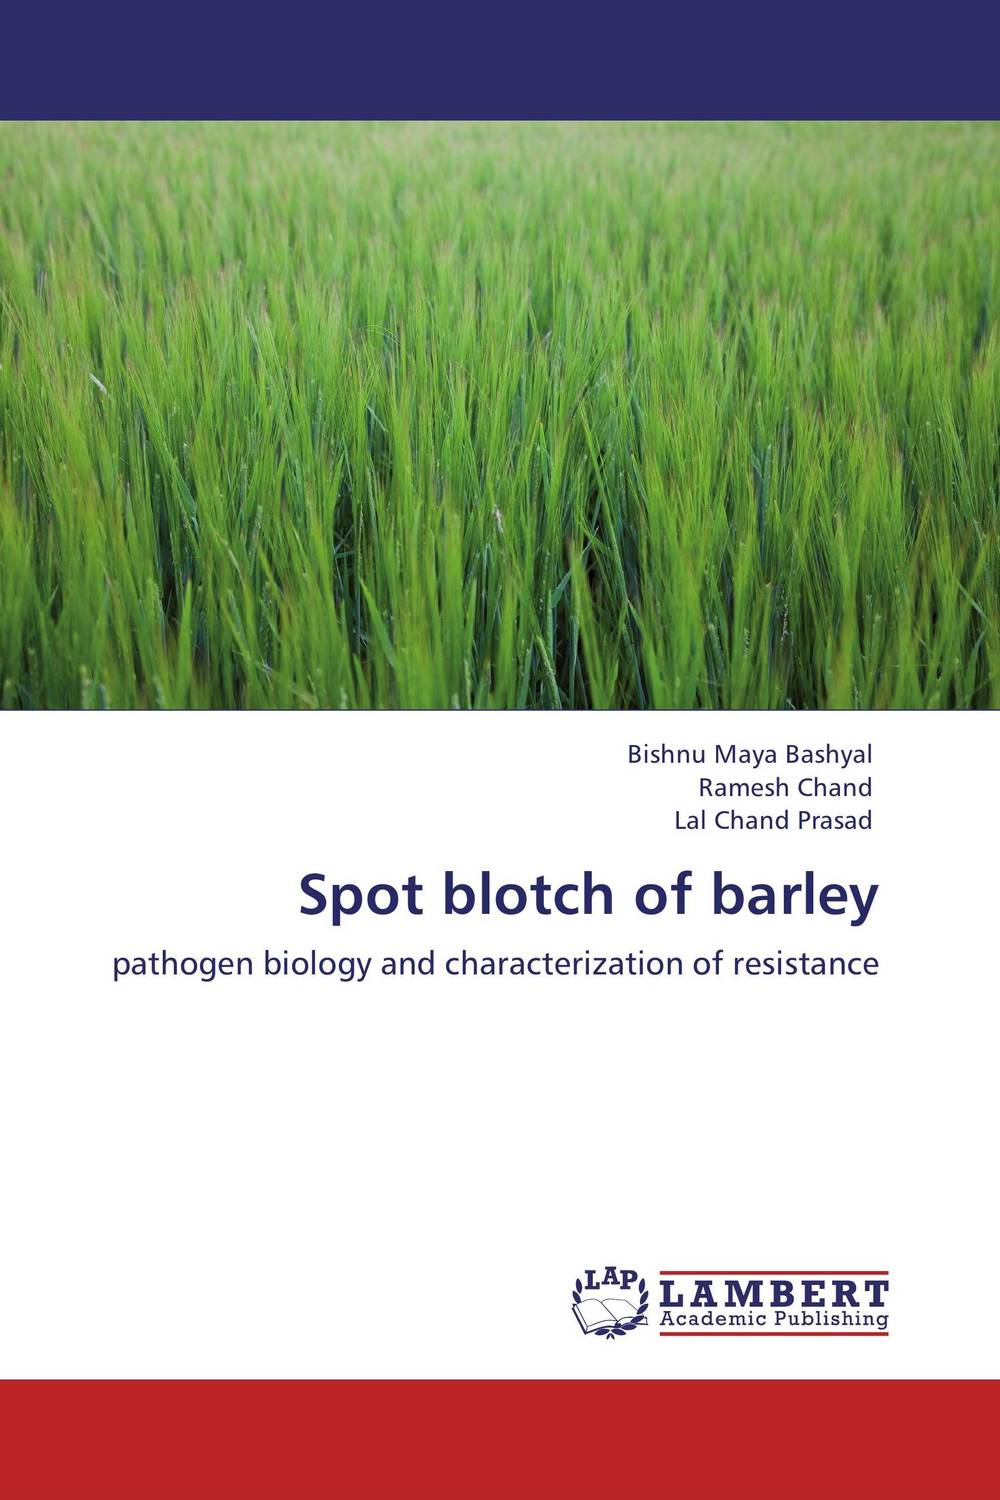 Spot blotch of barley